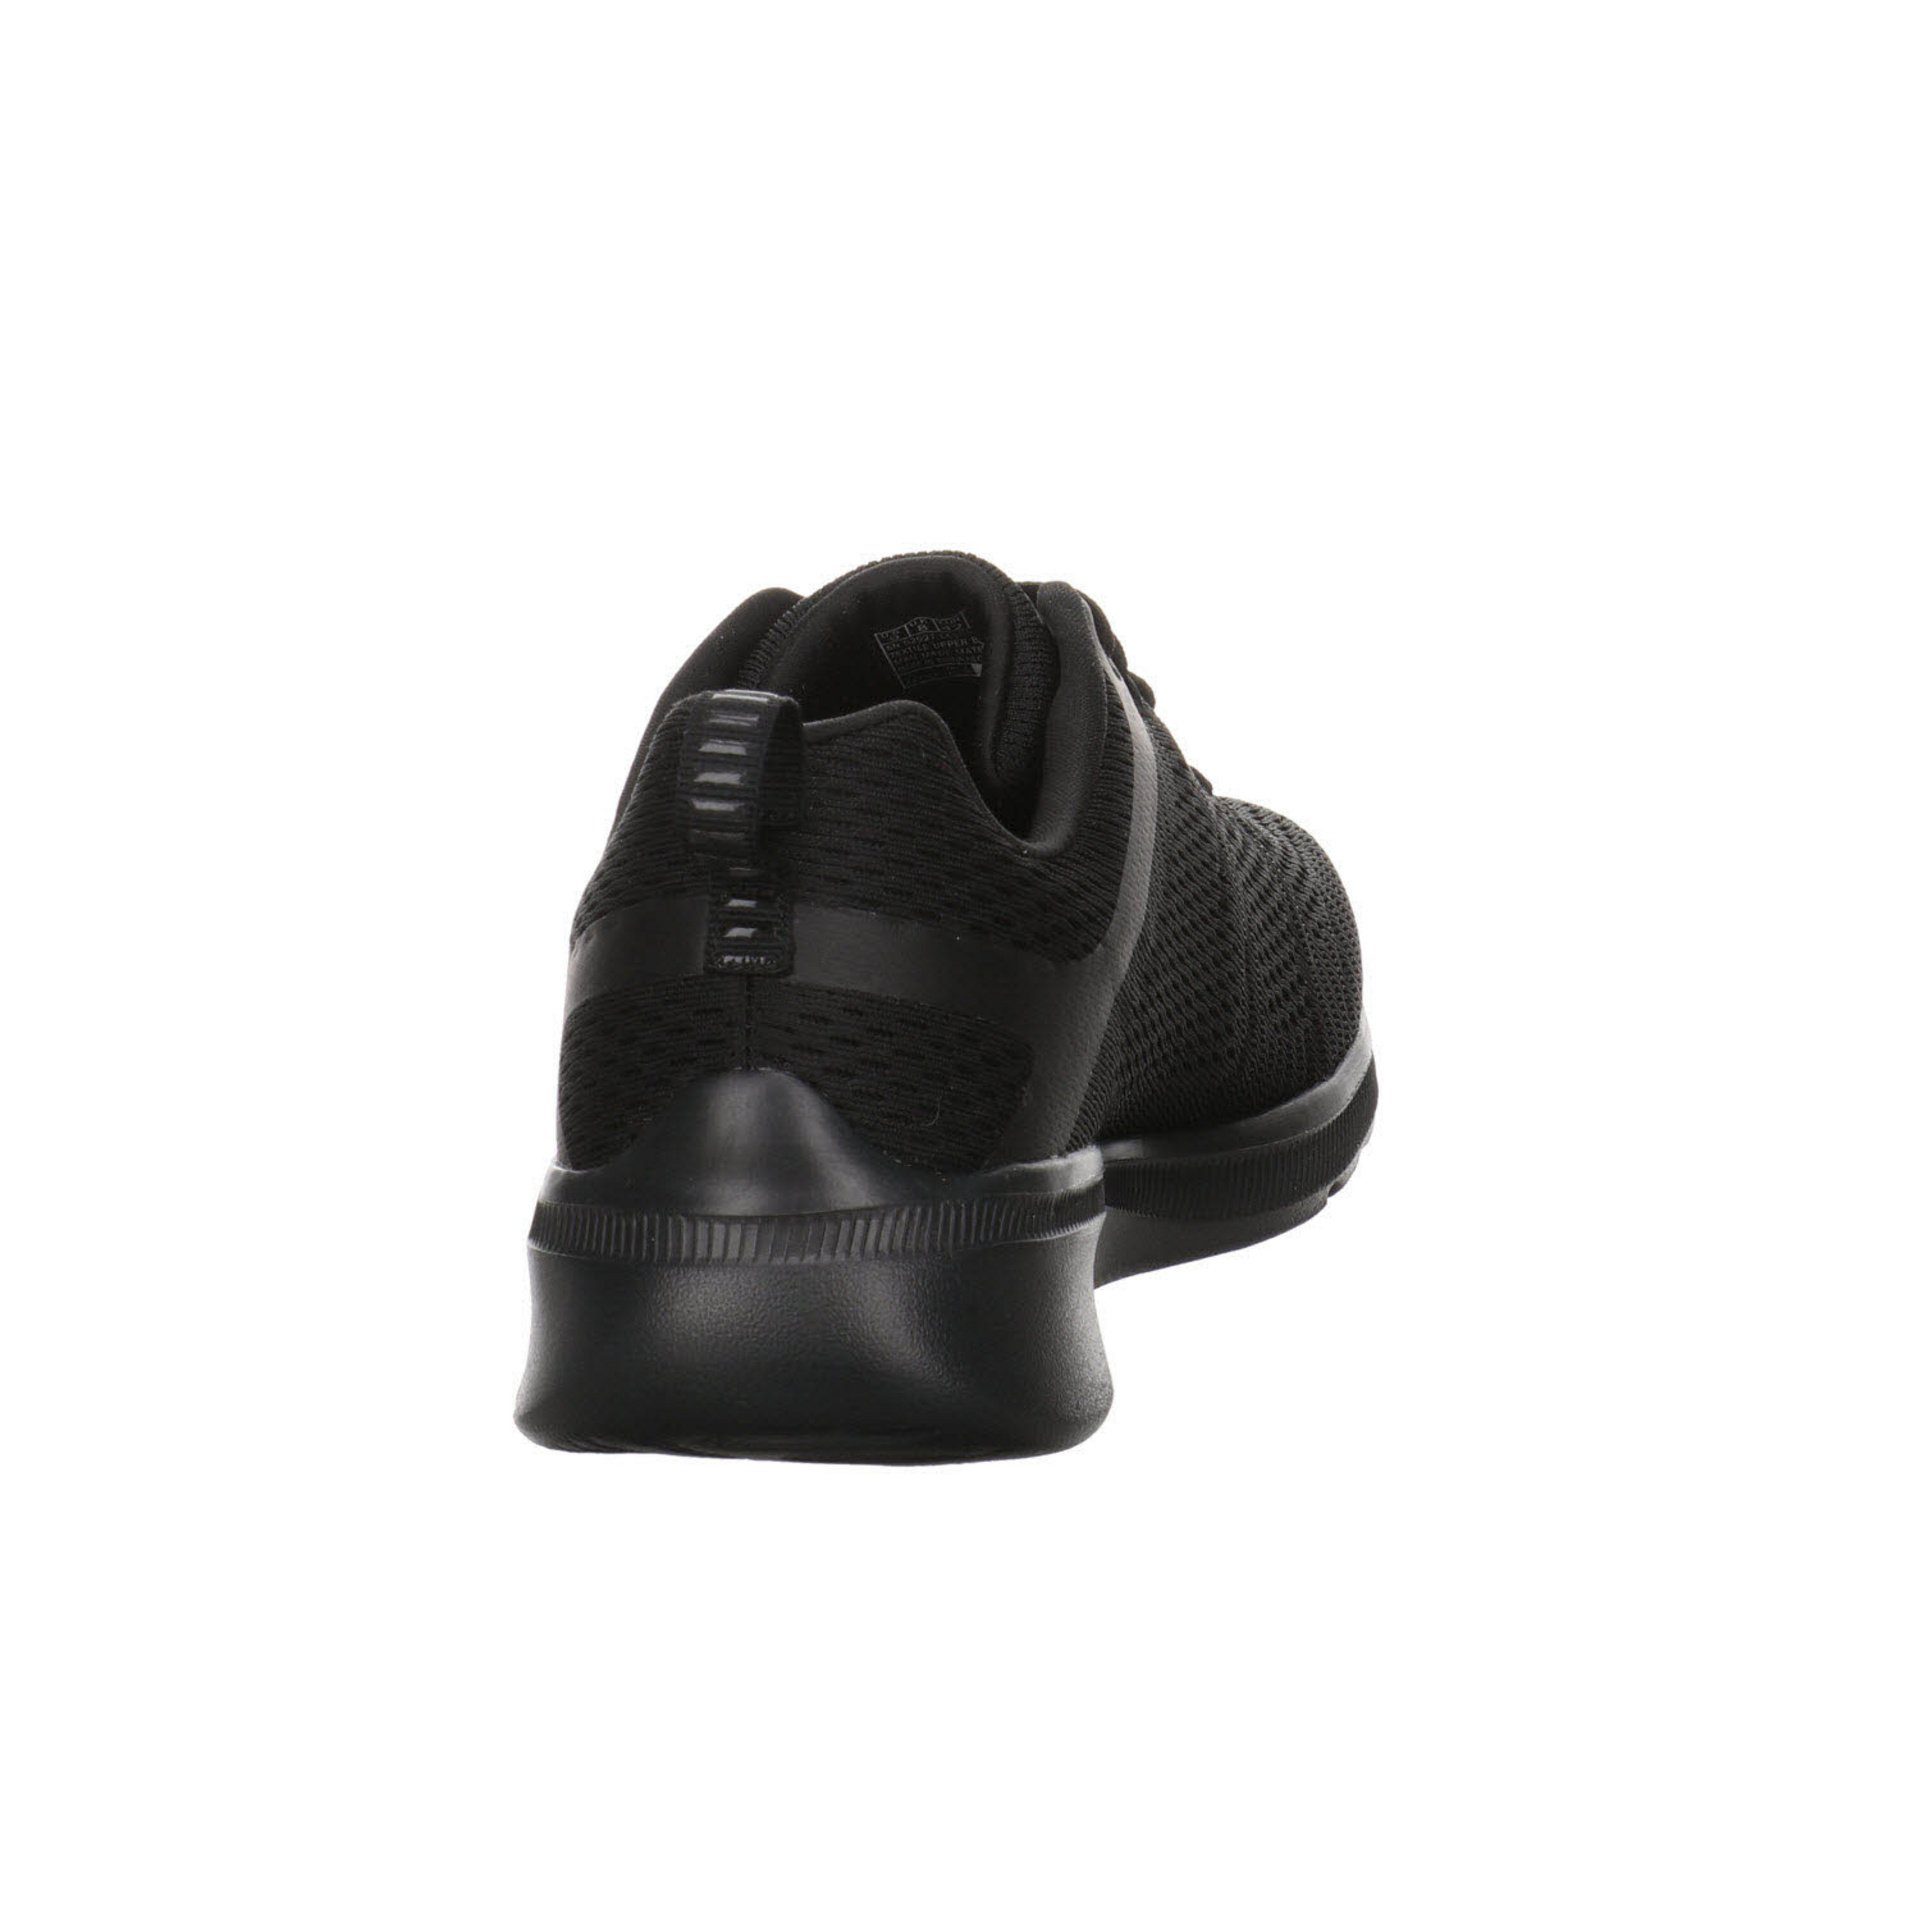 Sneaker Textil Fit-Equalizer Skechers Relaxed schwarz uni Textil Sneaker 3.0